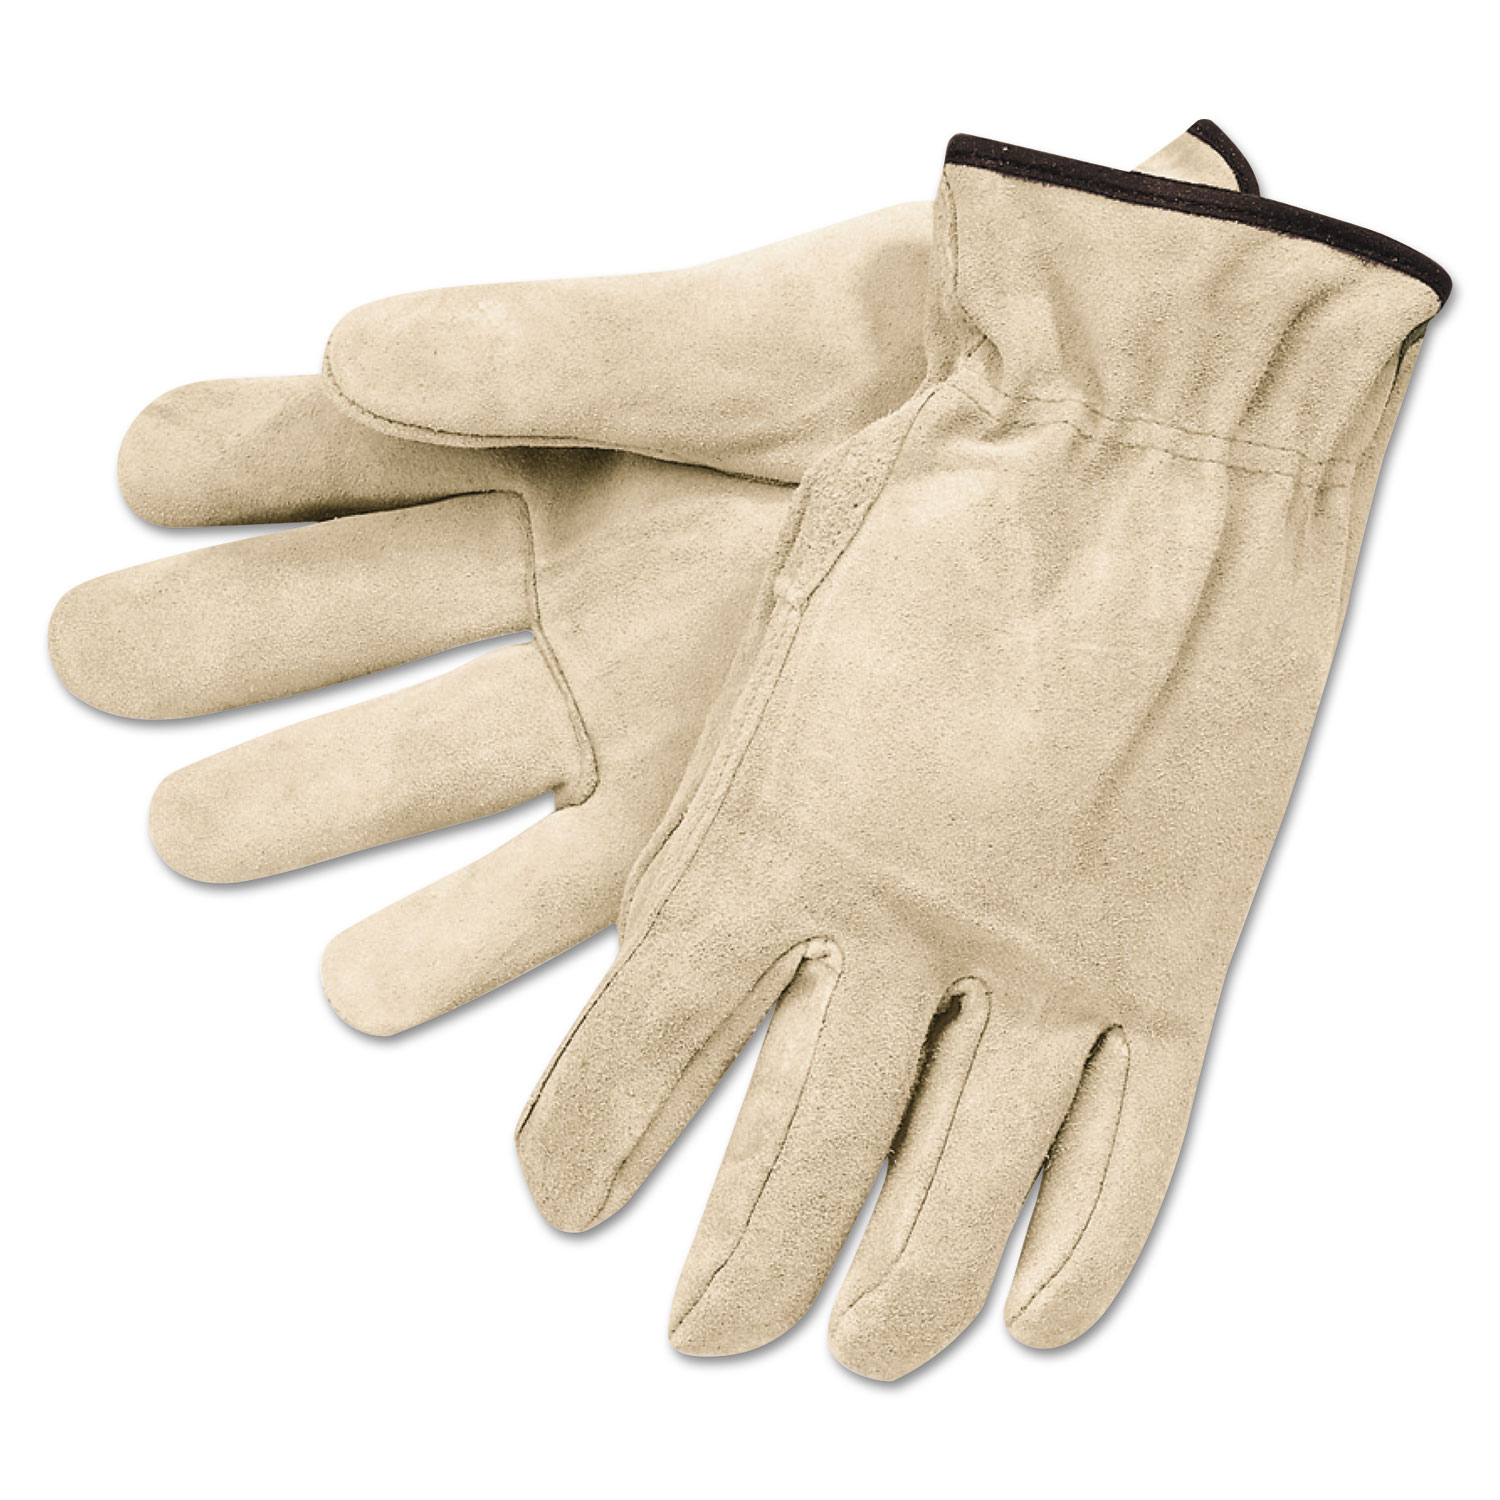  MCR Safety 3100XL Driver's Gloves, X-Large (MPG3100XL) 